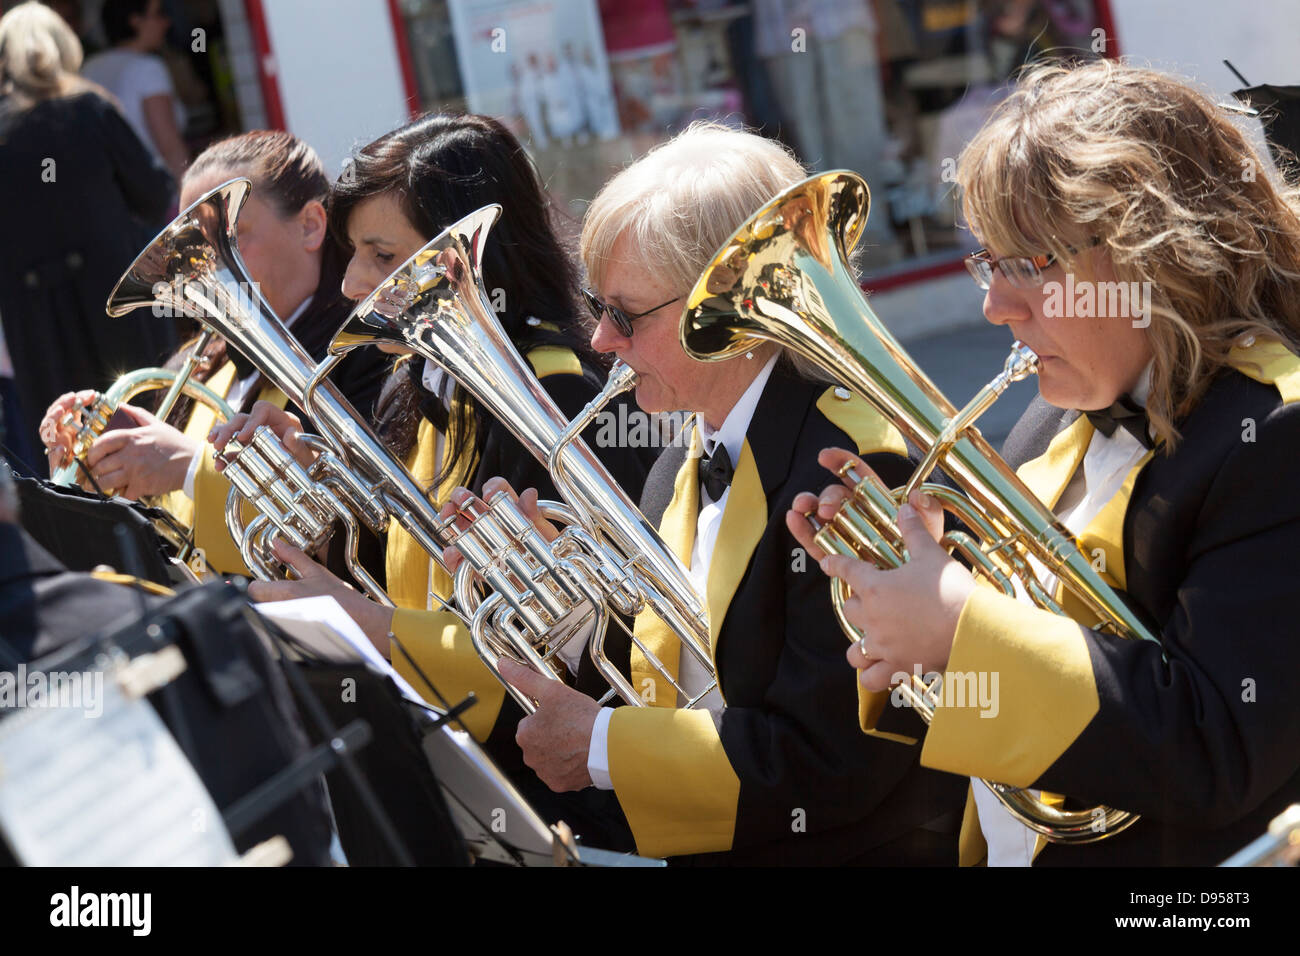 Four women band members playing baritone horns. Stock Photo